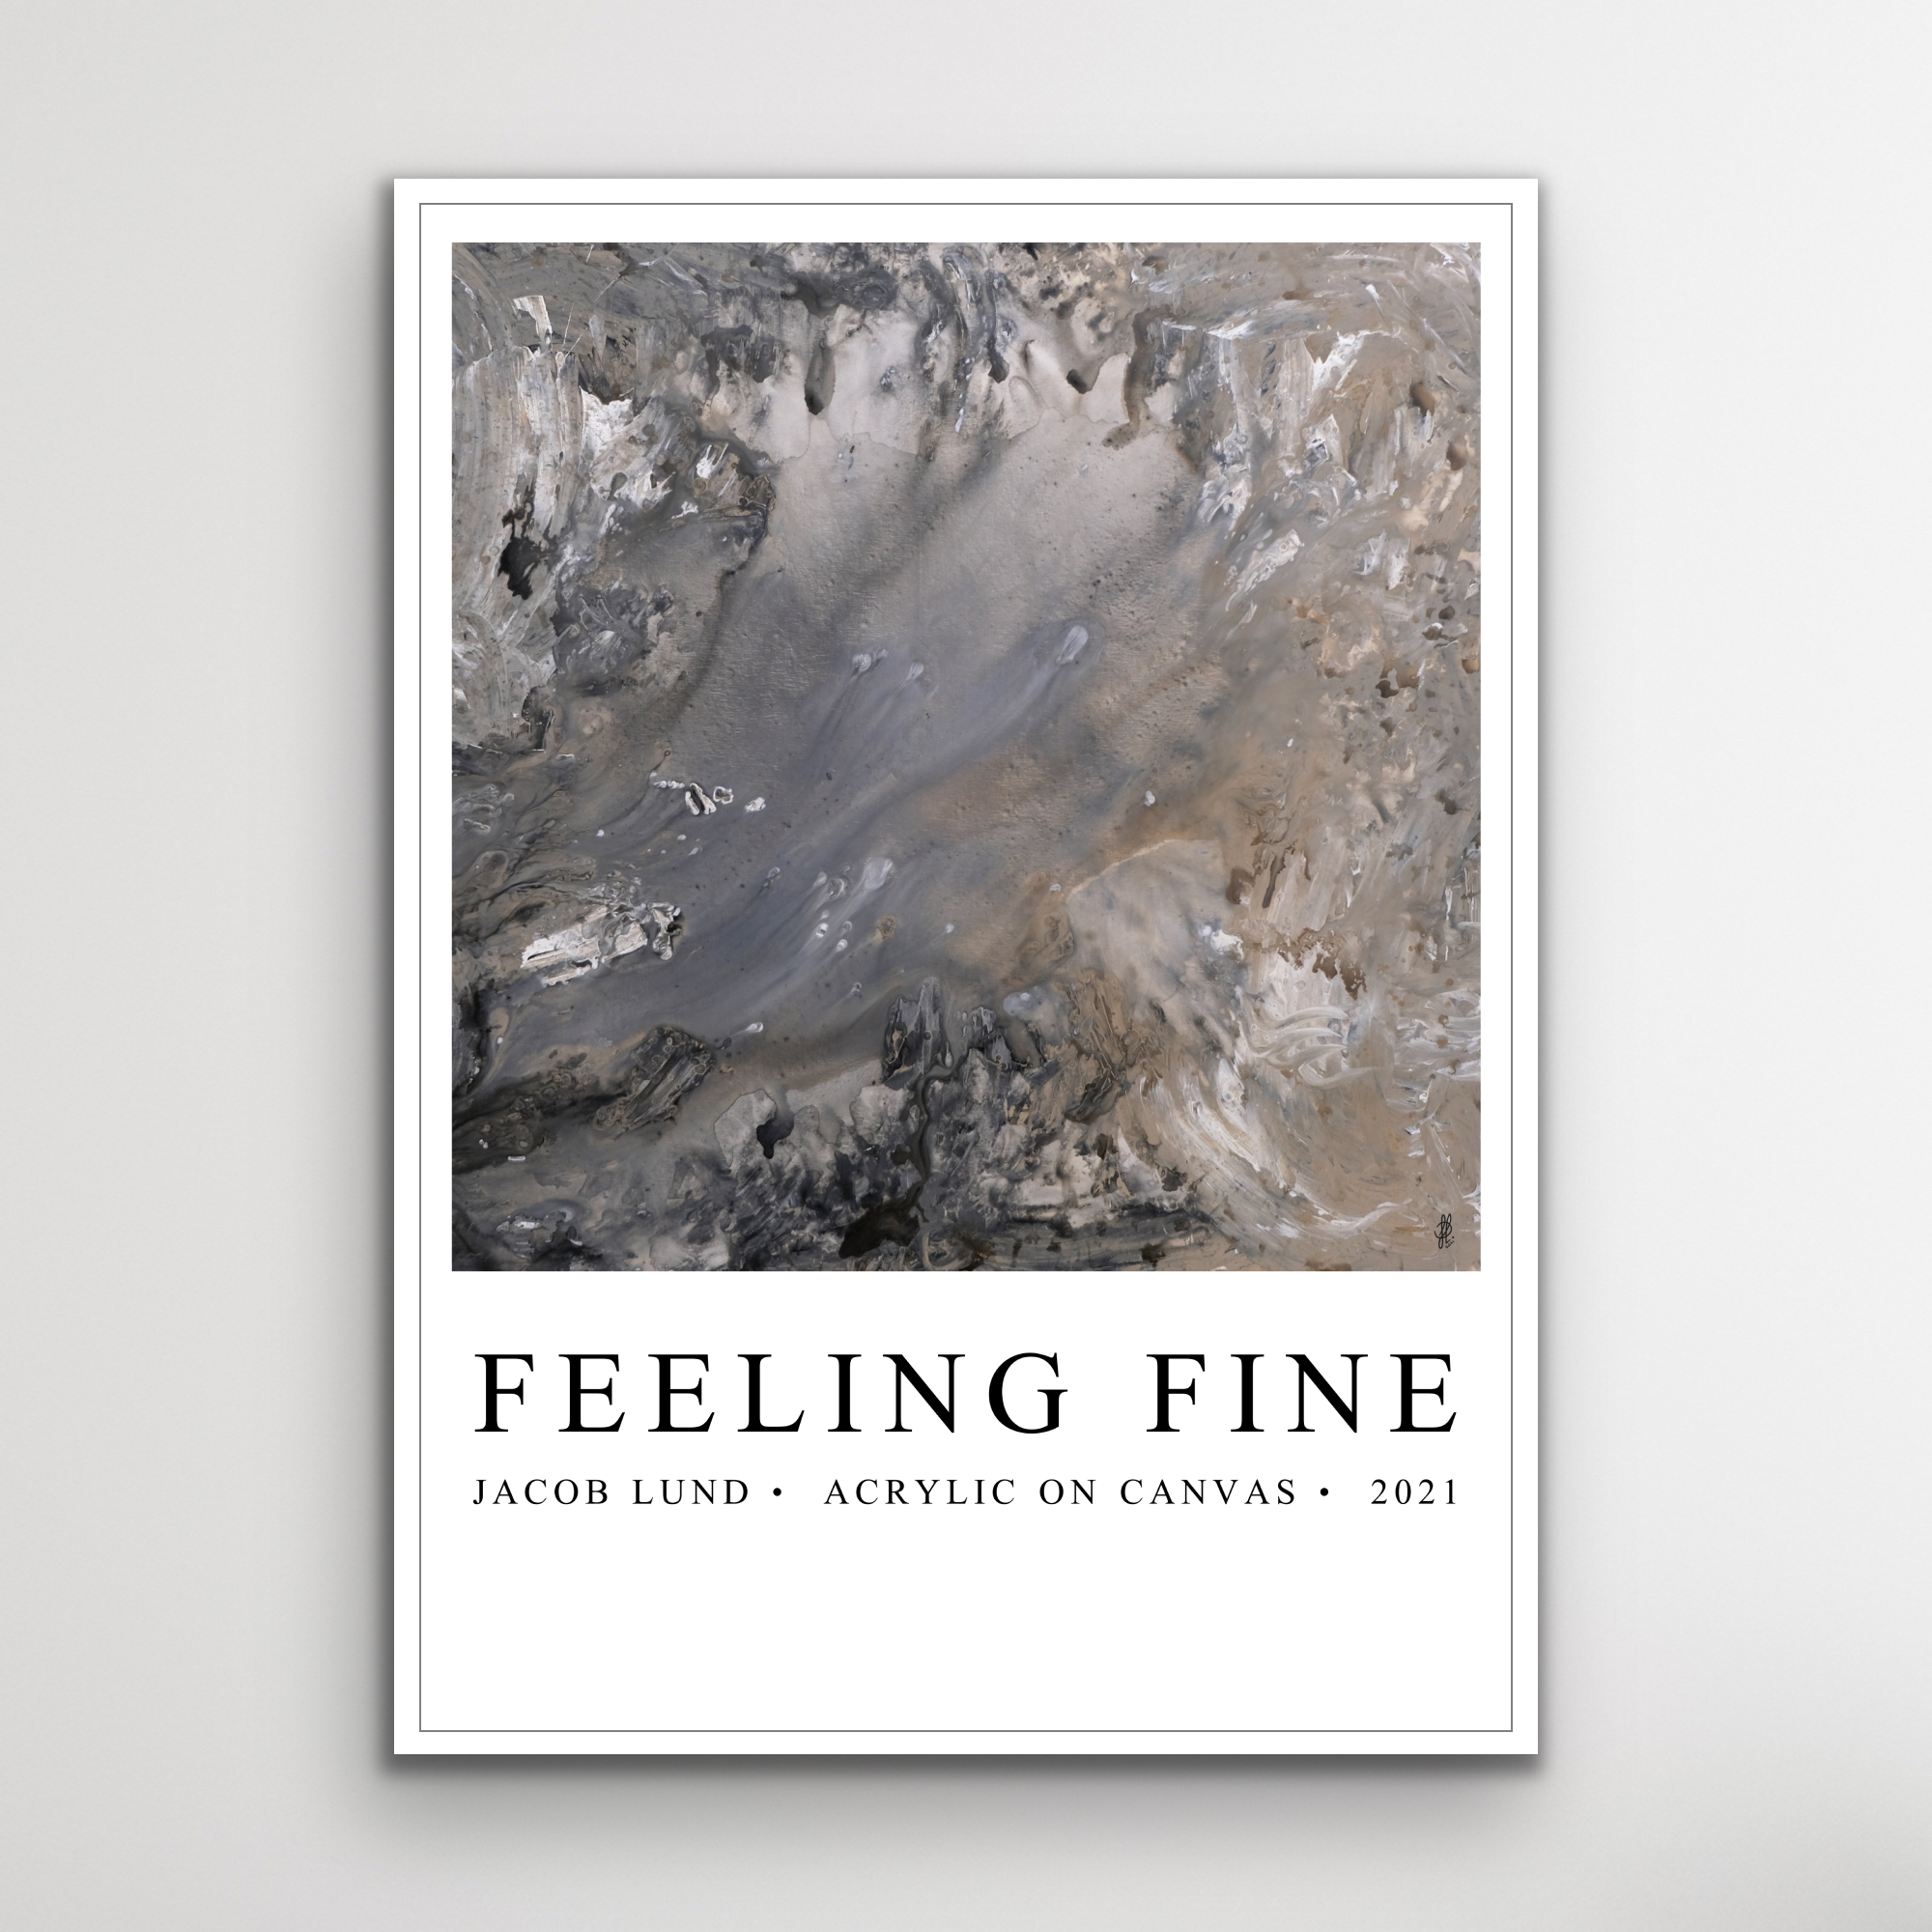 Plakat: "Feeling Fine" (hvid baggrund)